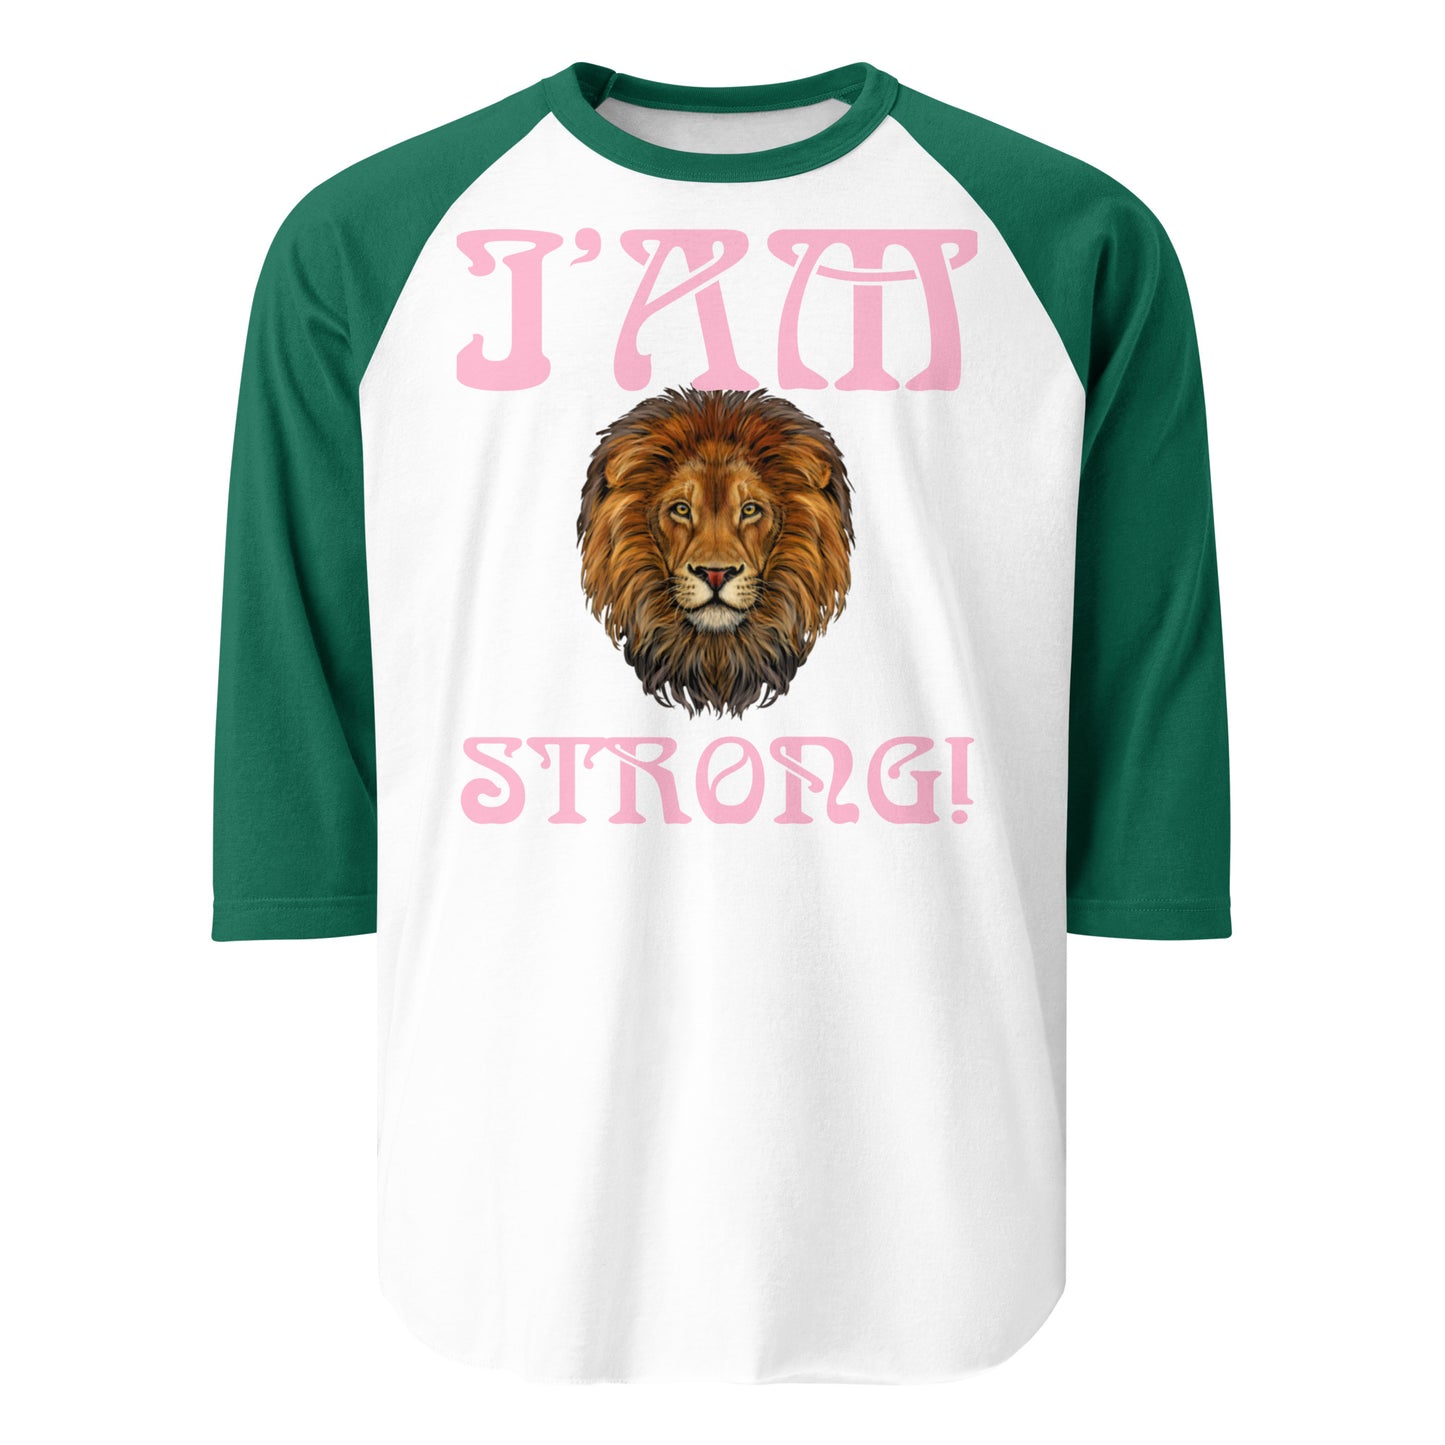 “I’AM STRONG!” 3/4 Sleeve Raglan Shirt W/Cotton Candy Font